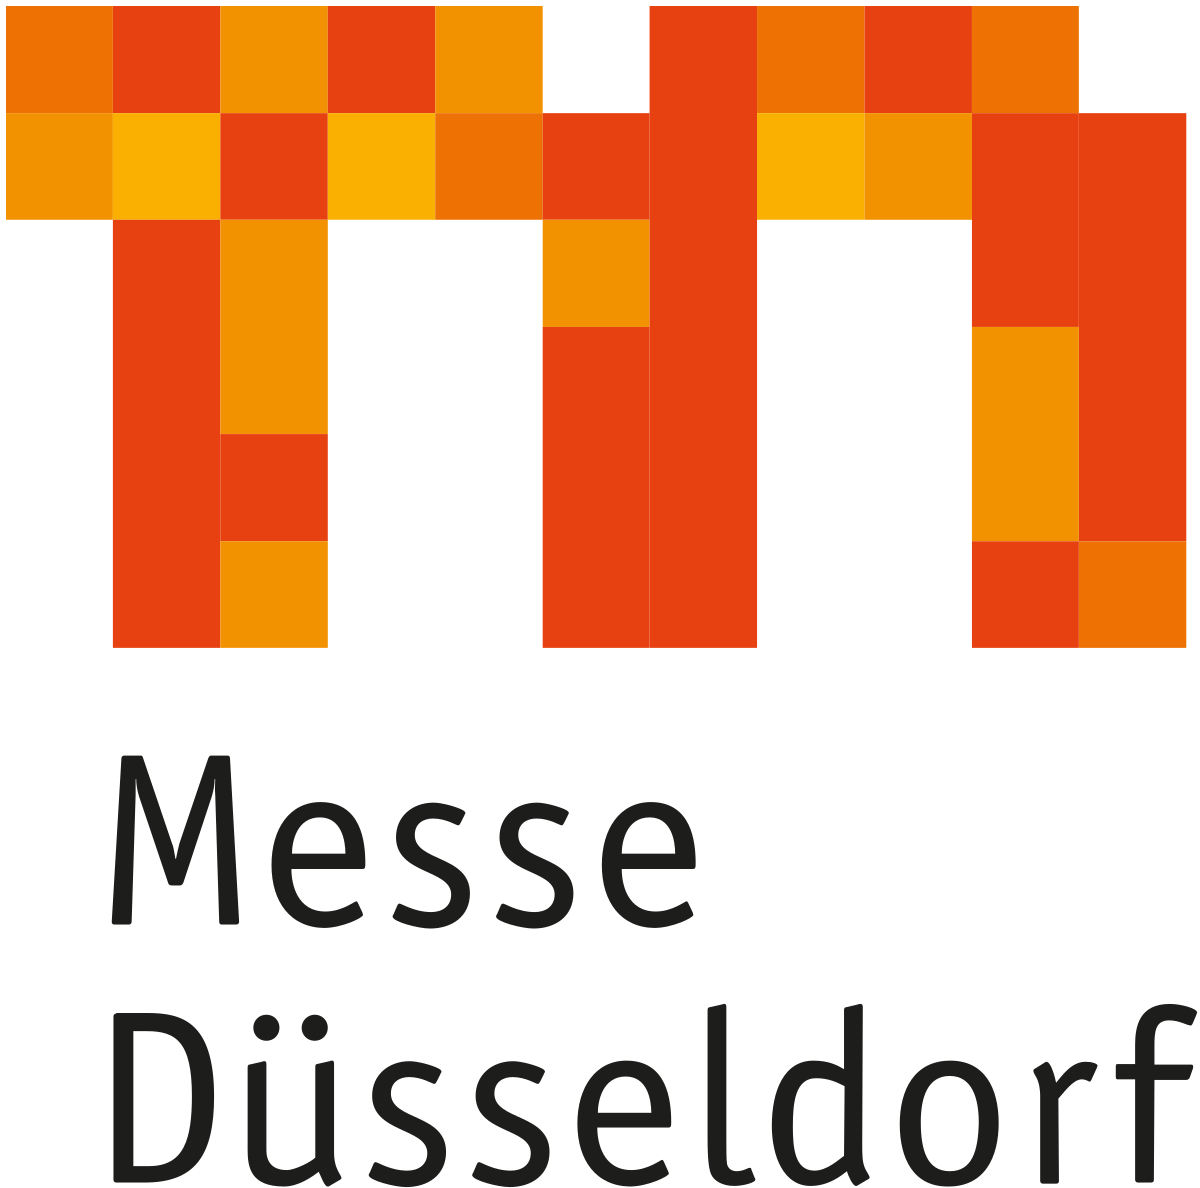 Messe Dusseldorf